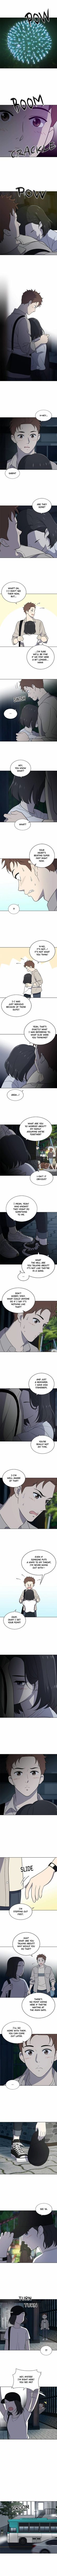 She's Hopeless - Page 1